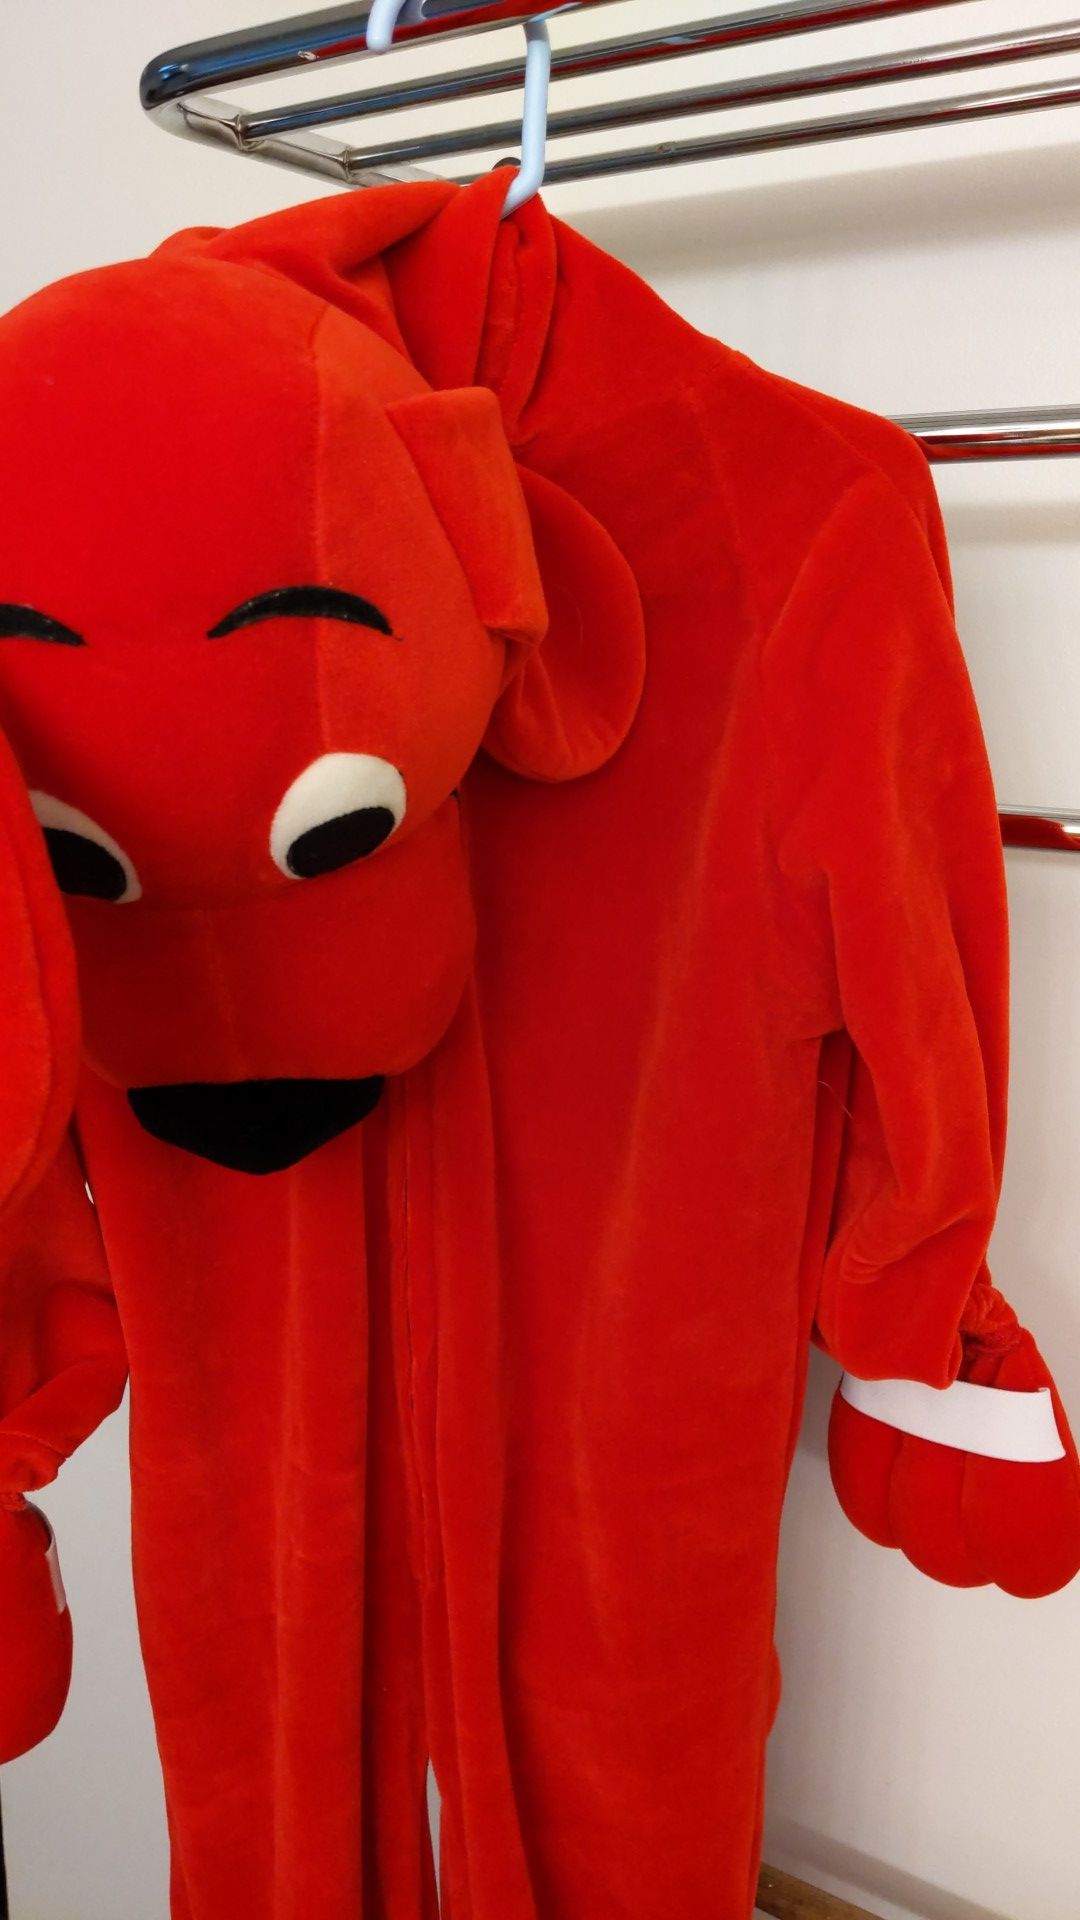 Clifford costume